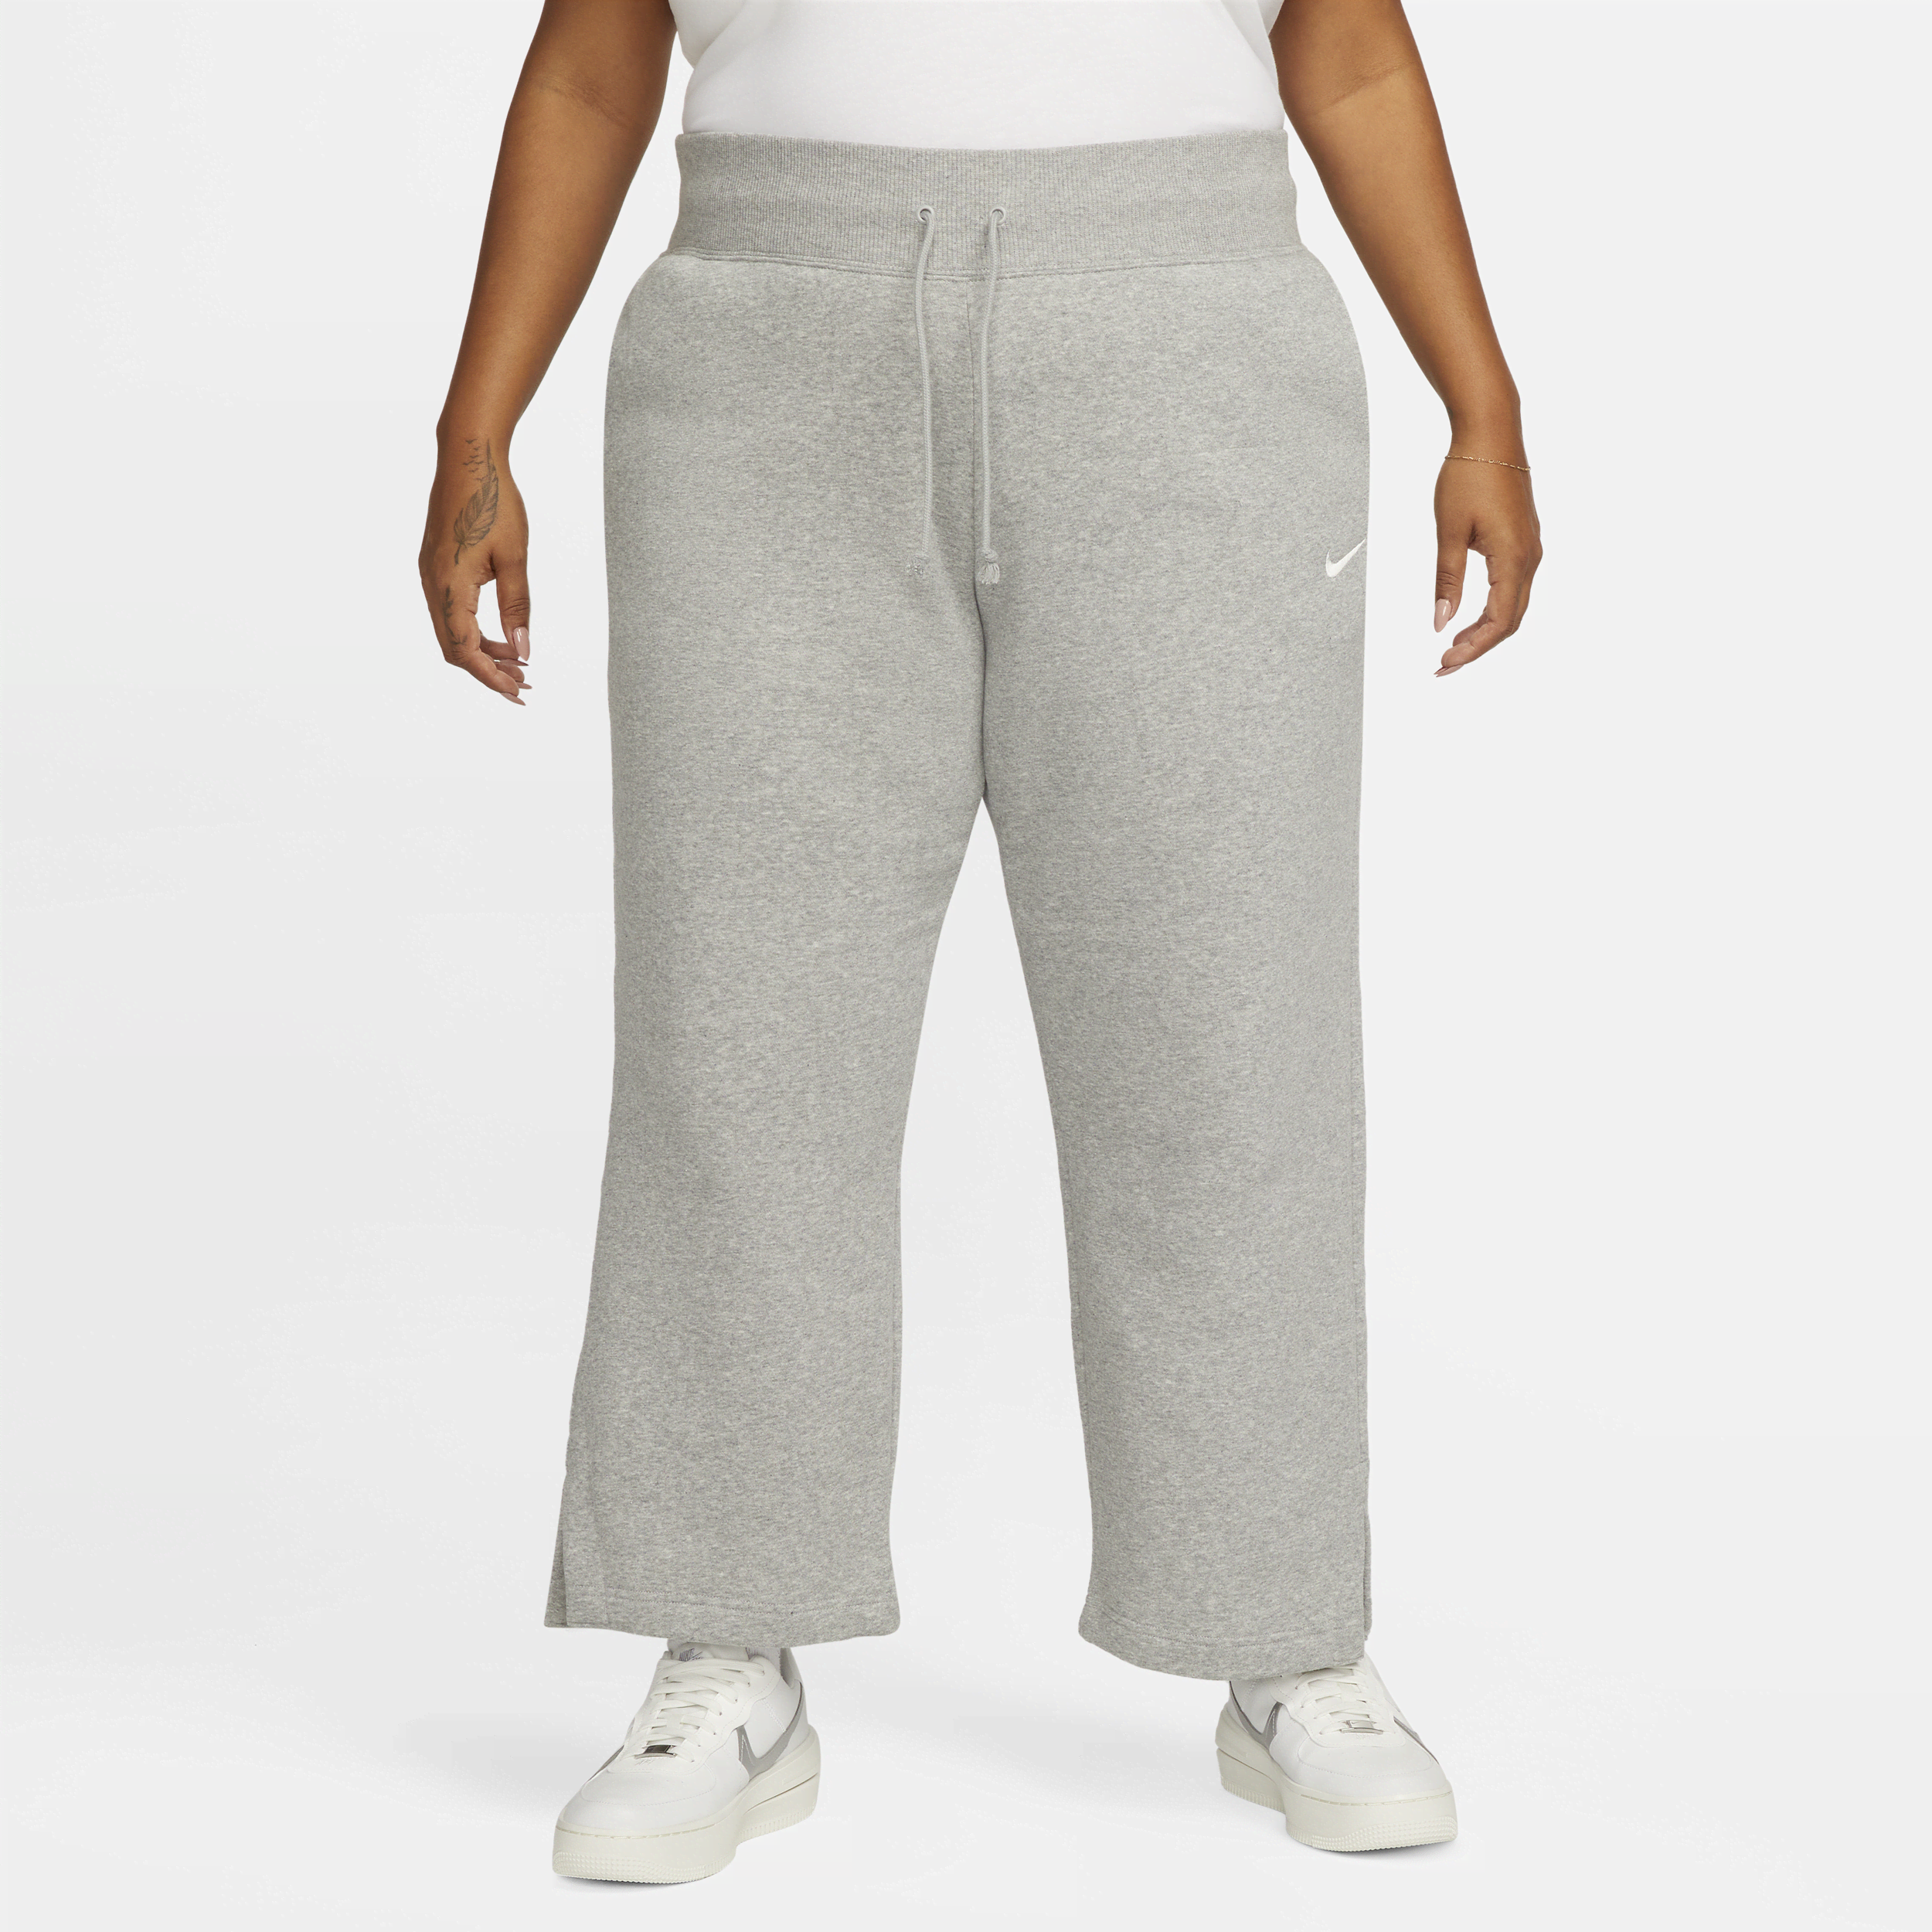 Pantaloni tuta a gamba ampia e vita alta Nike Sportswear Phoenix Fleece – Donna - Grigio